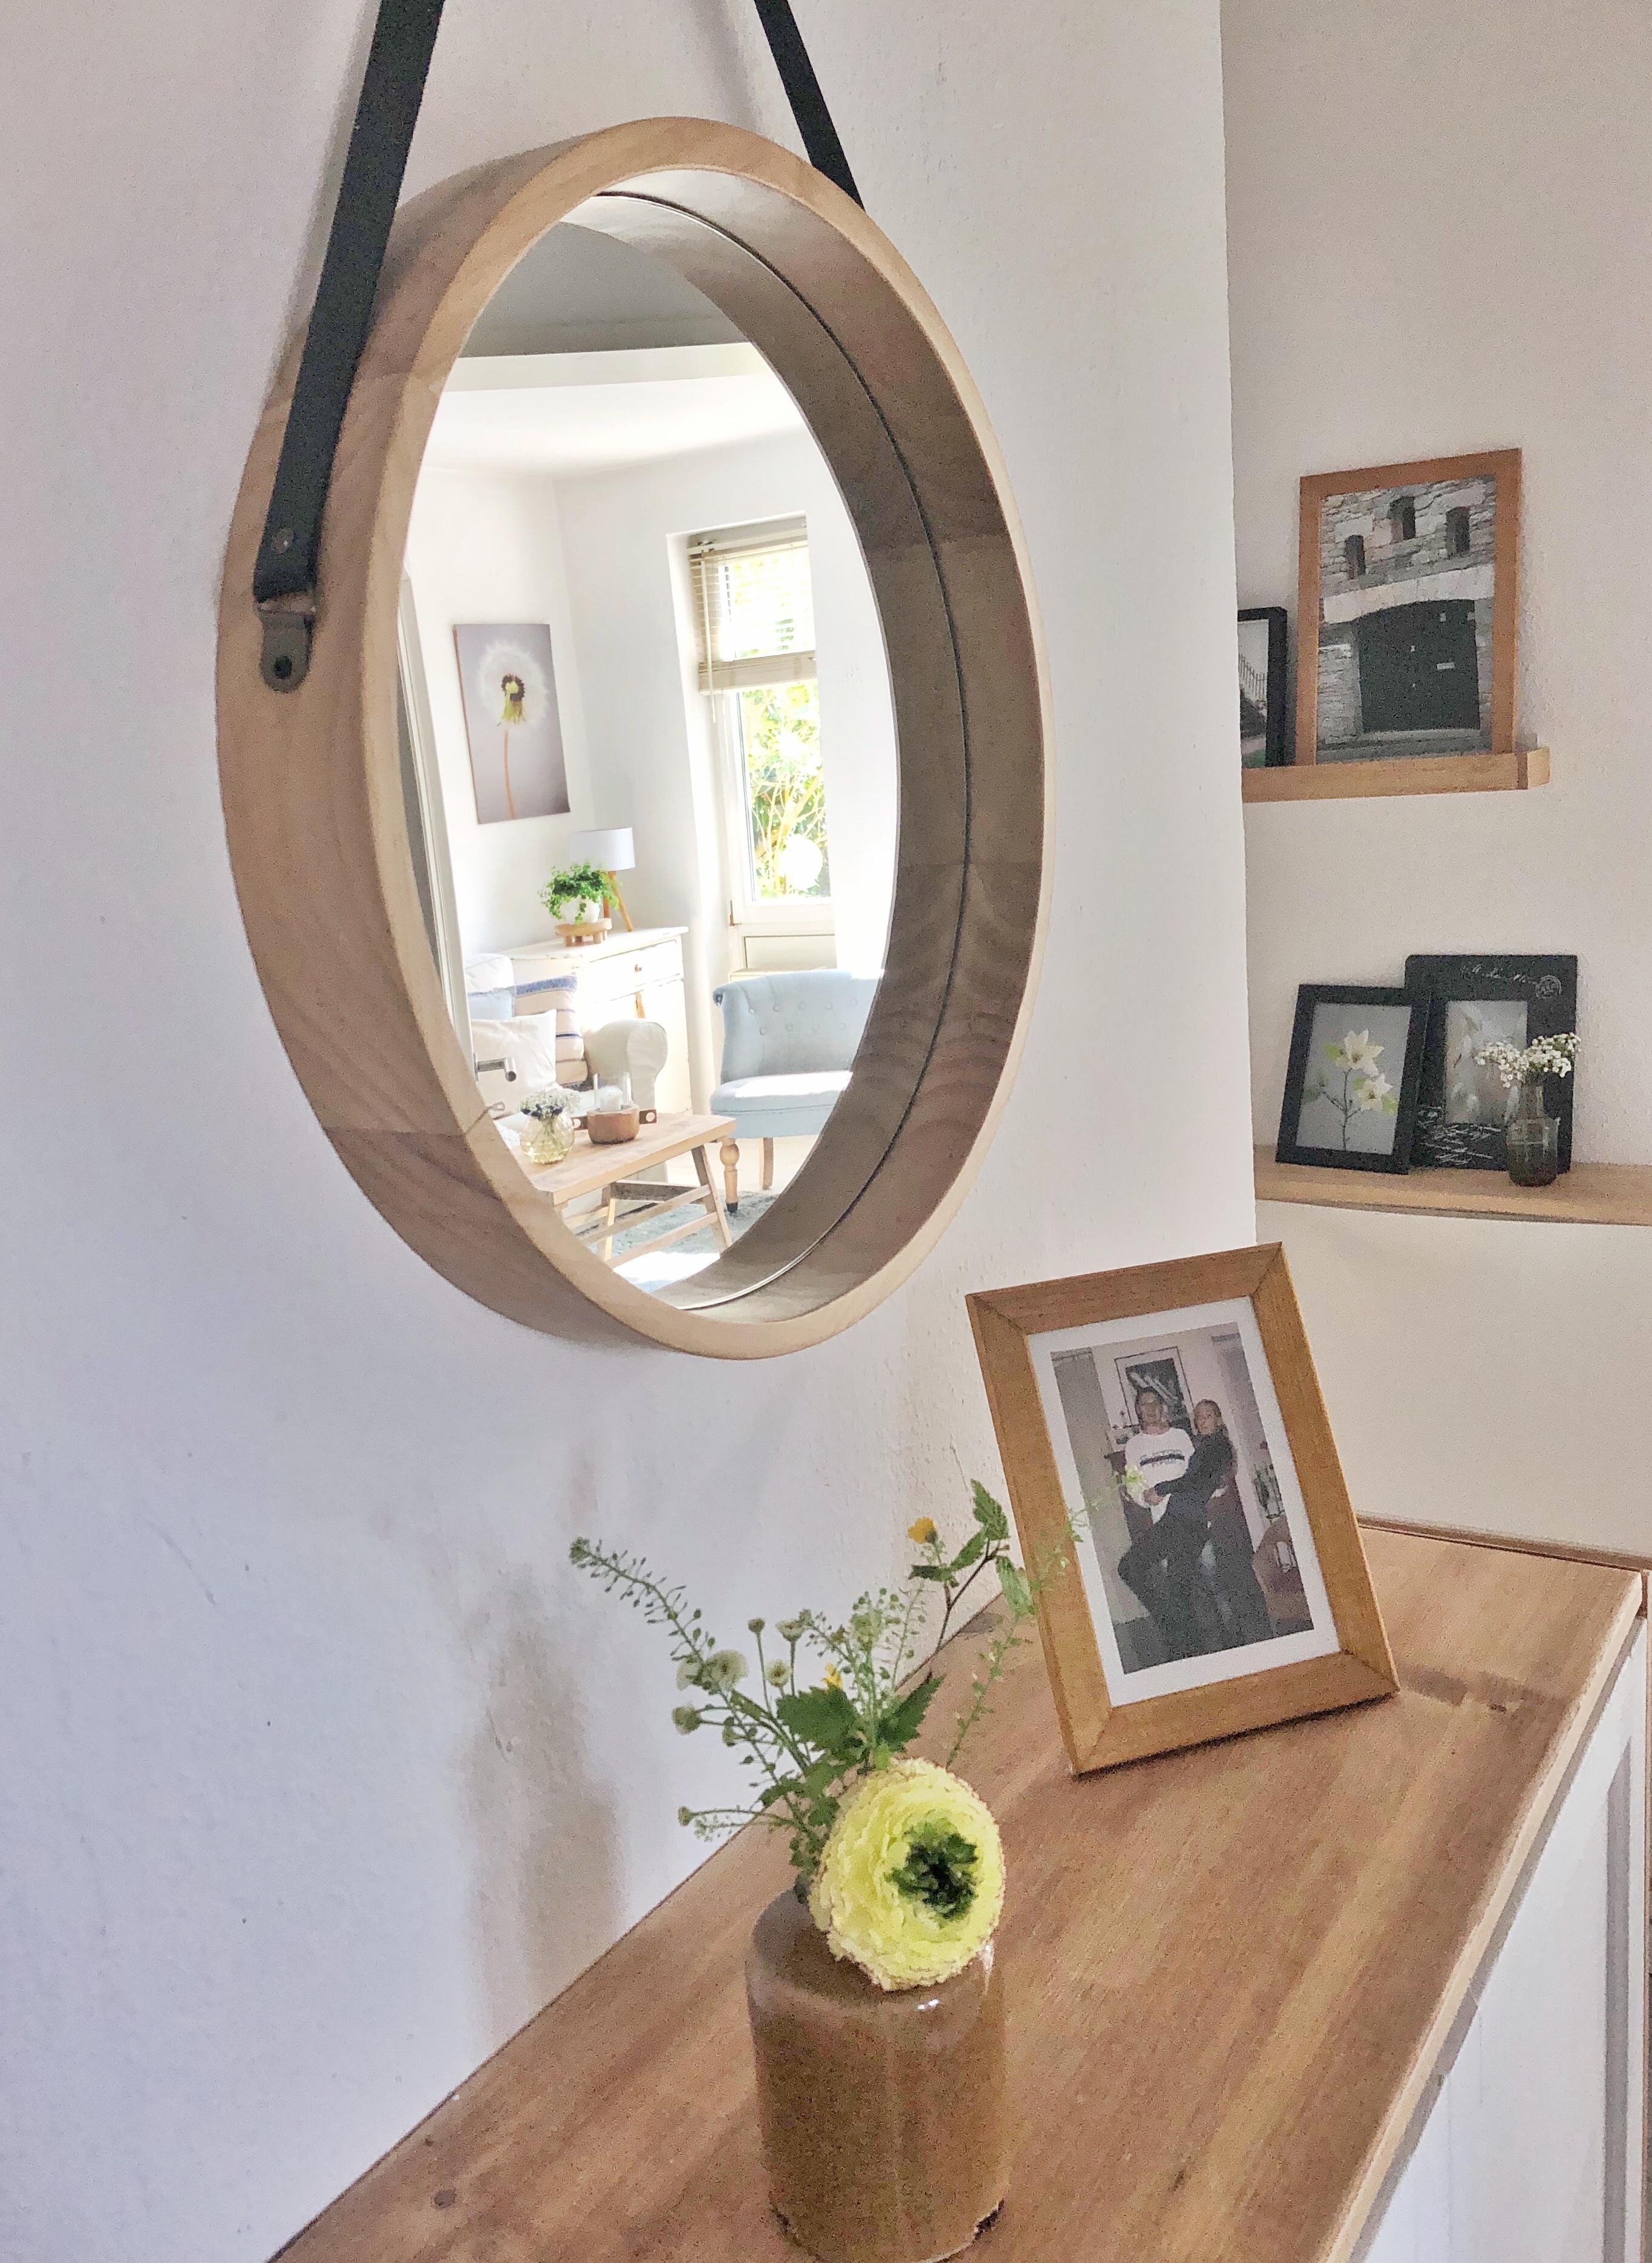 Blick in den Spiegel 
#livingroom#flur#interior#couchstyle 